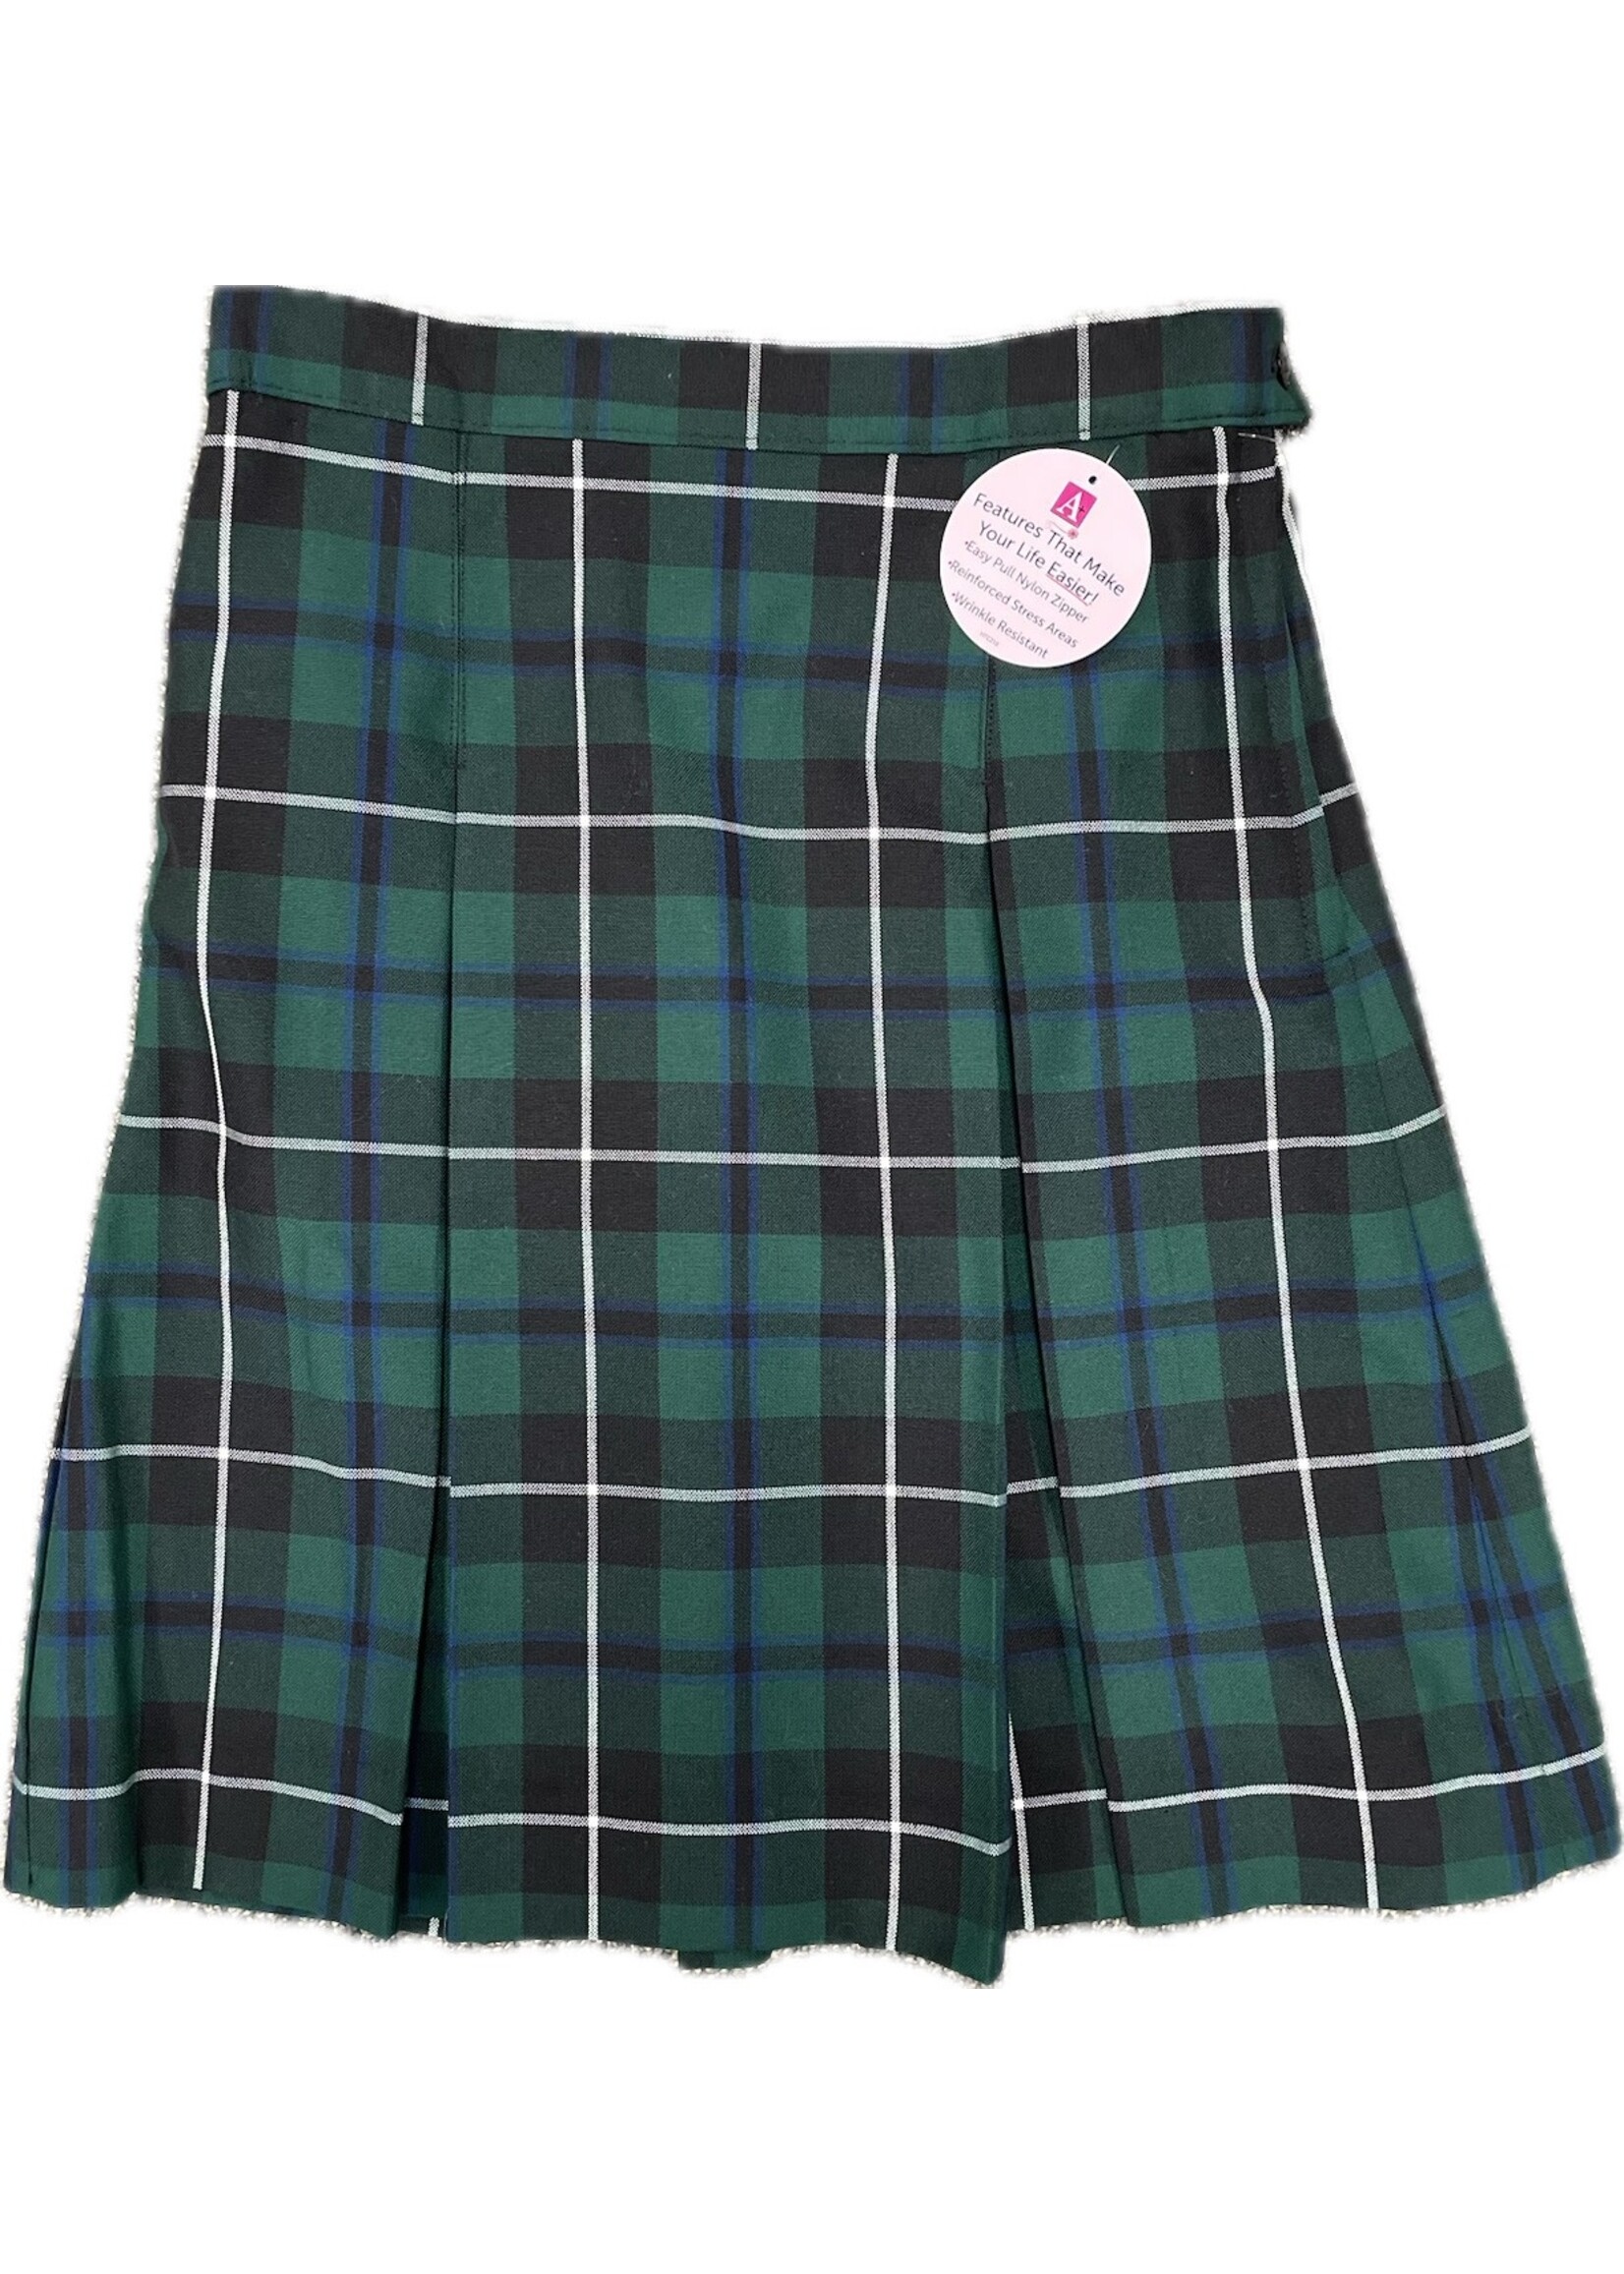 UNIFORM SJB Skirt SJ-Girls-1034 PPR/H Plaid 90-Skirt-4th 8th-grade